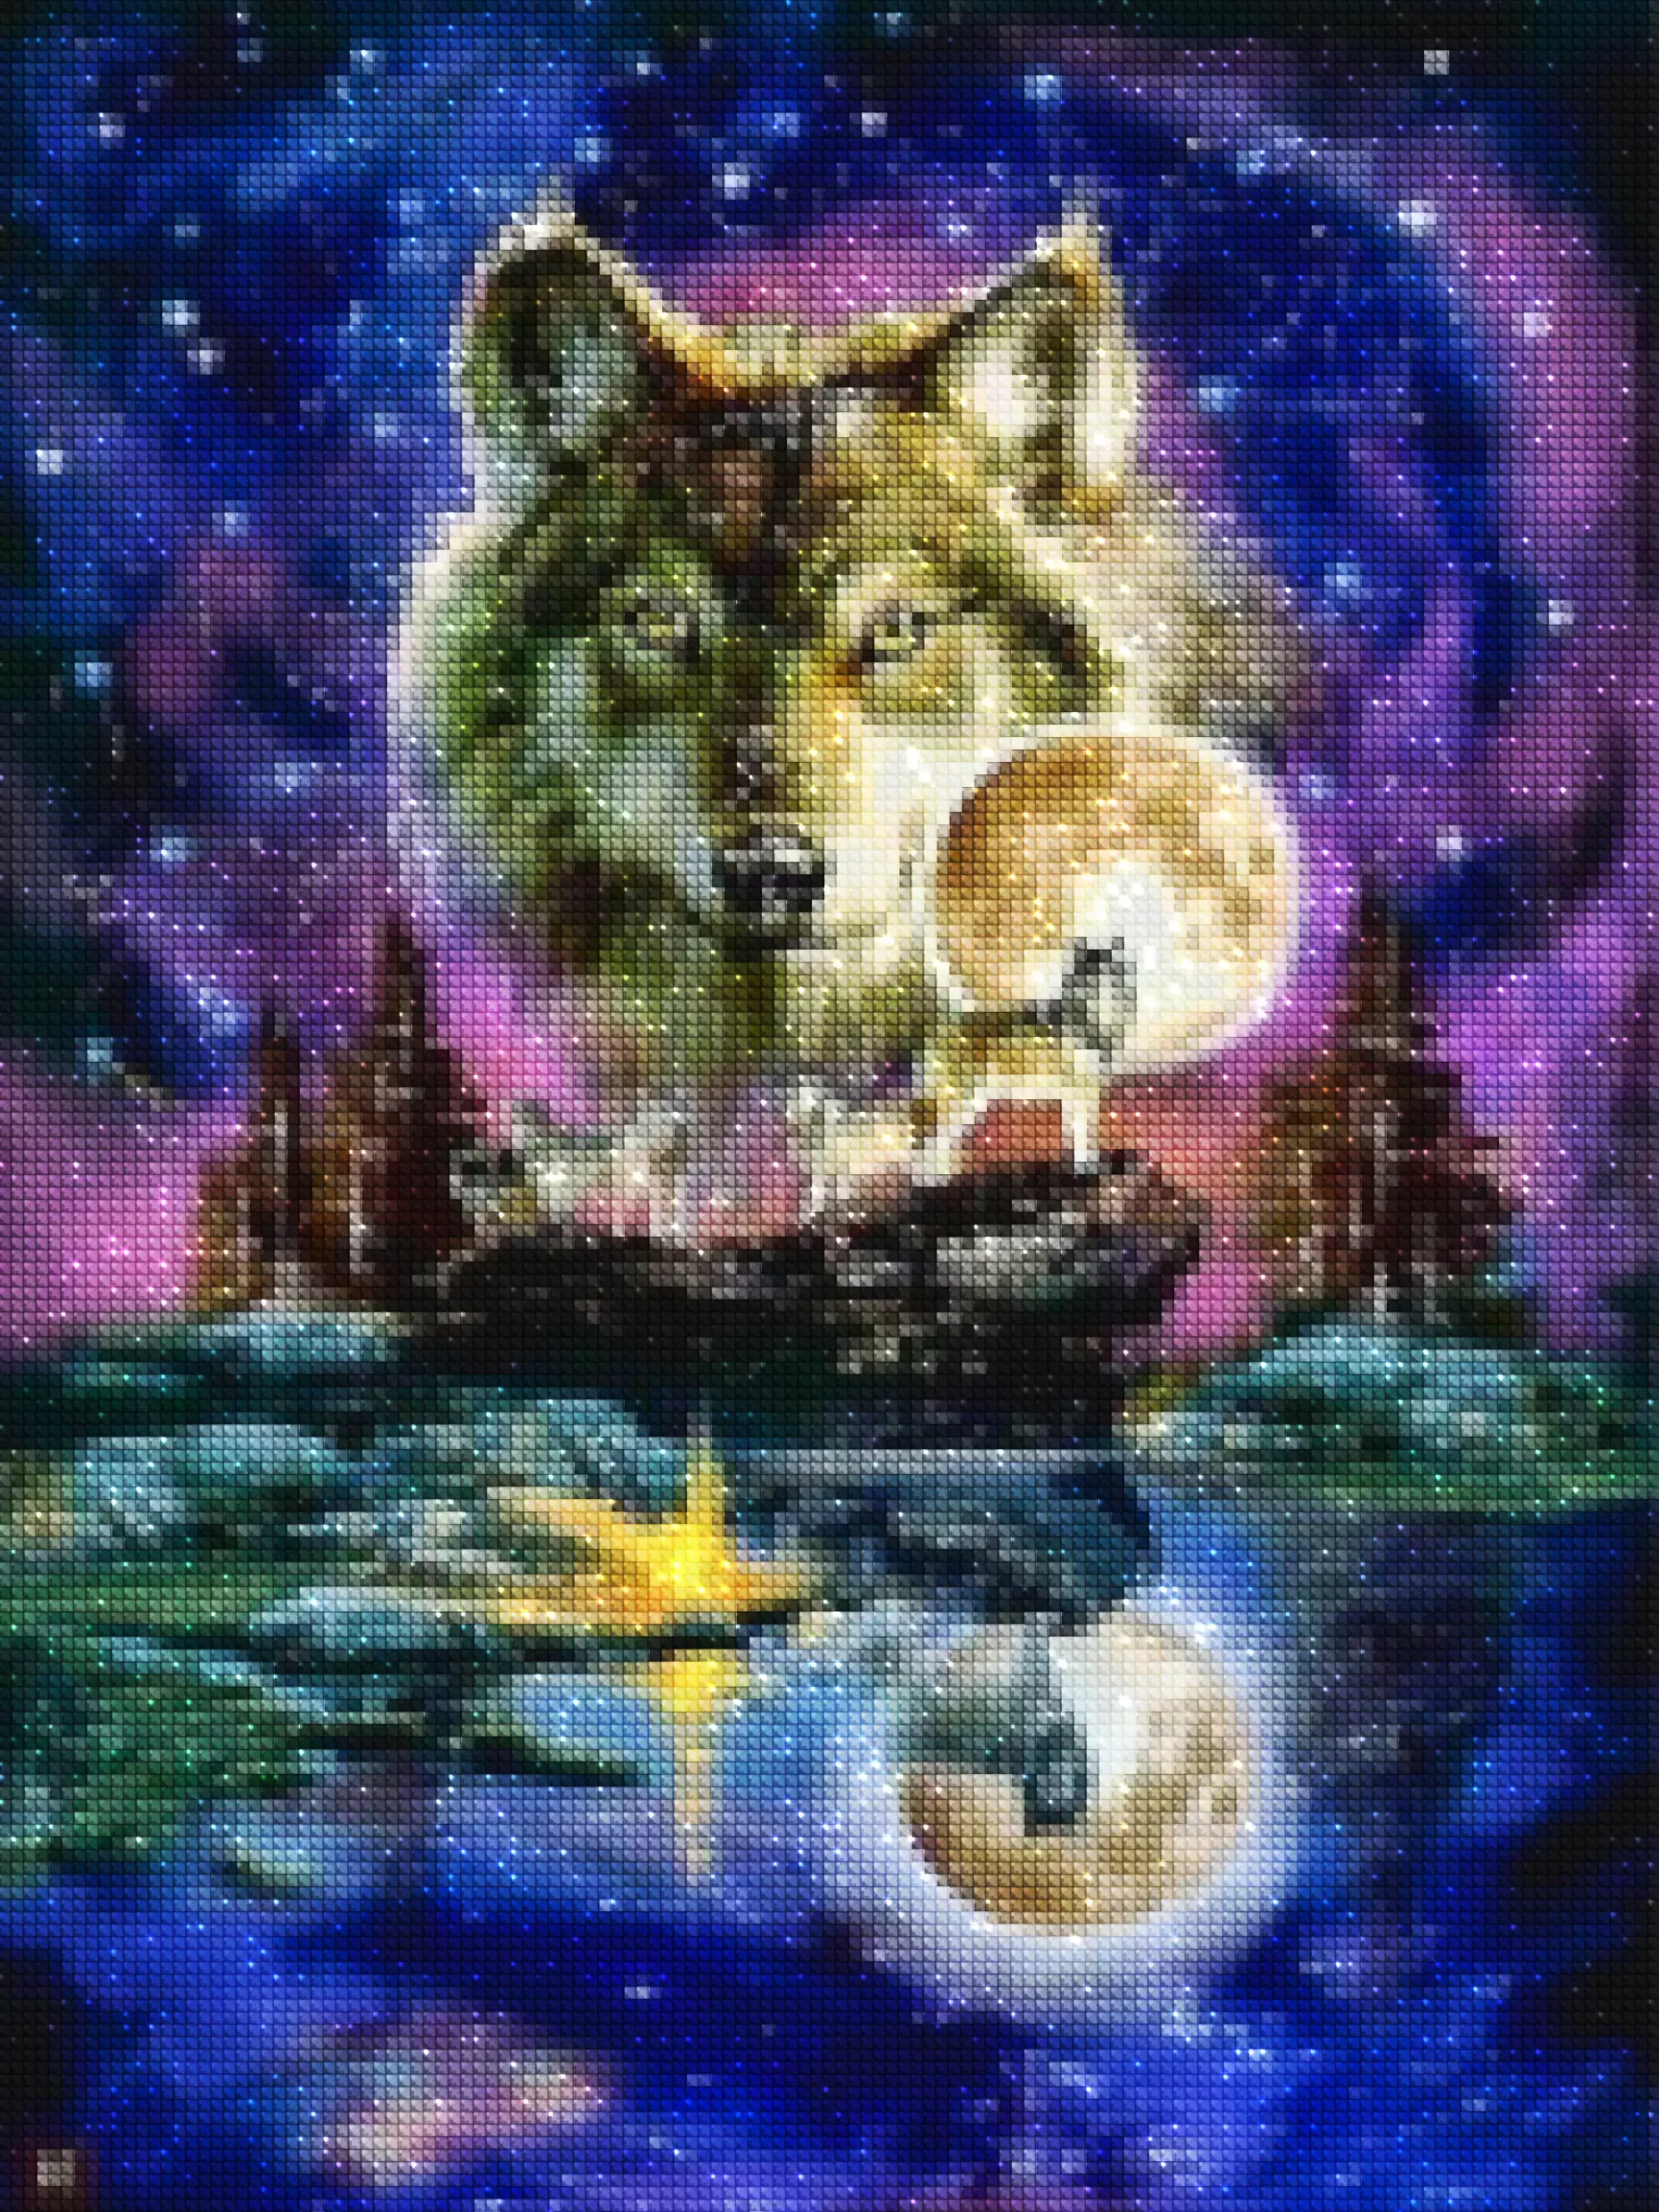 Wolf under Moon DIY Diamond Painting [USA SHIPPING] – All Diamond Painting